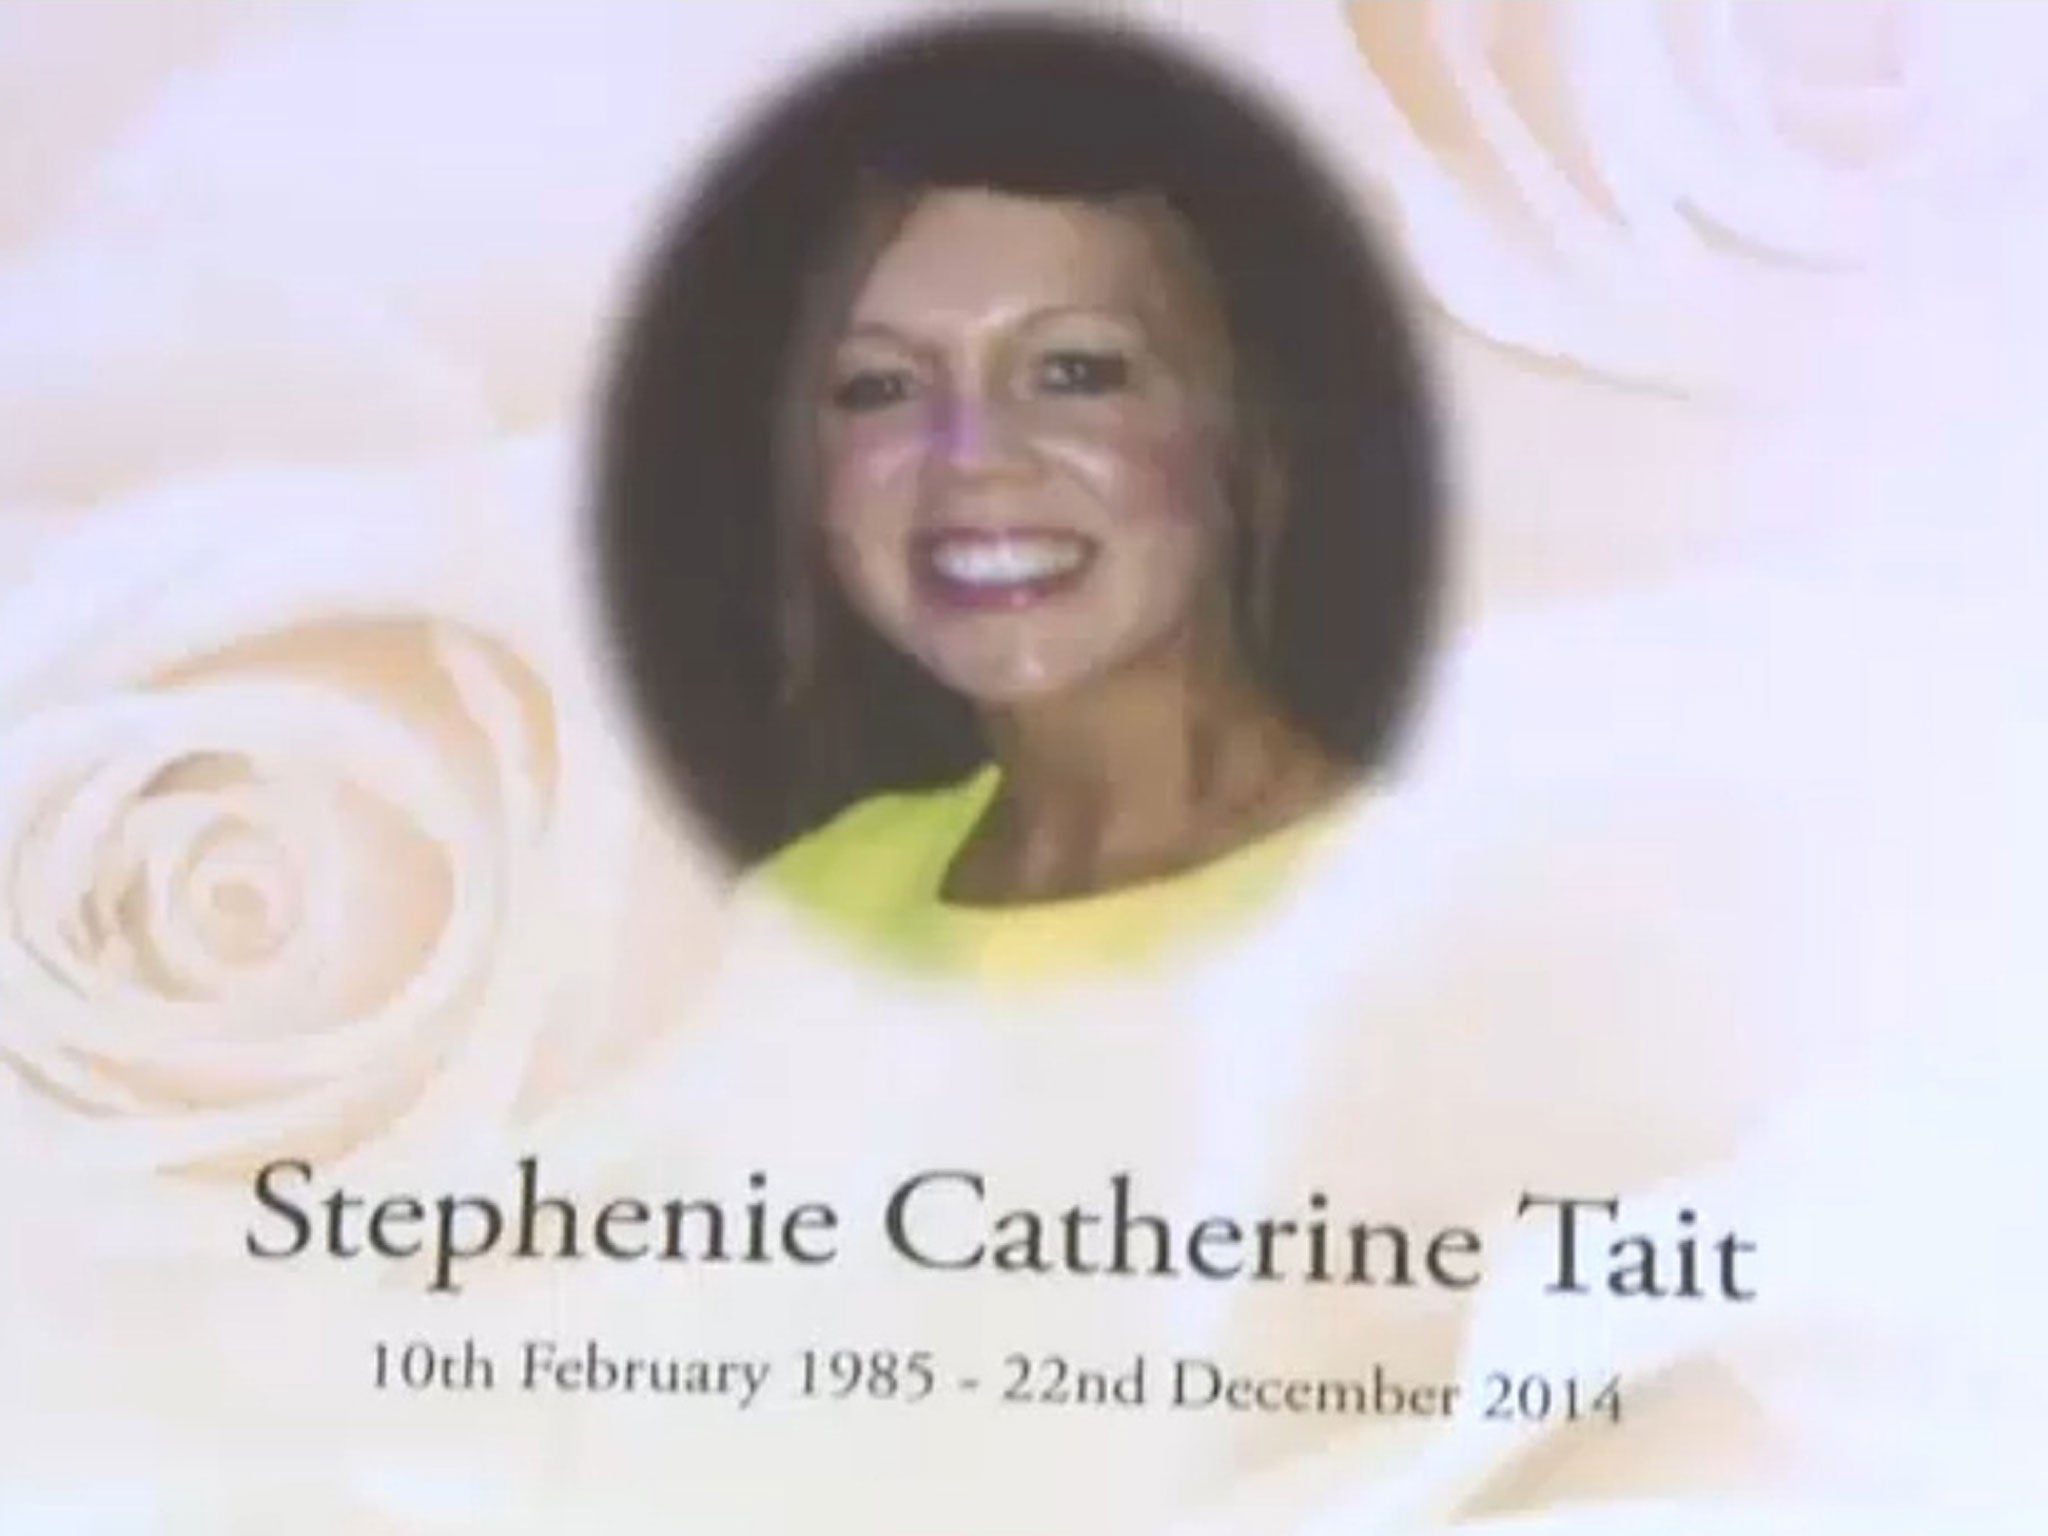 The primary school teacher Stephenie Tait died aged 29